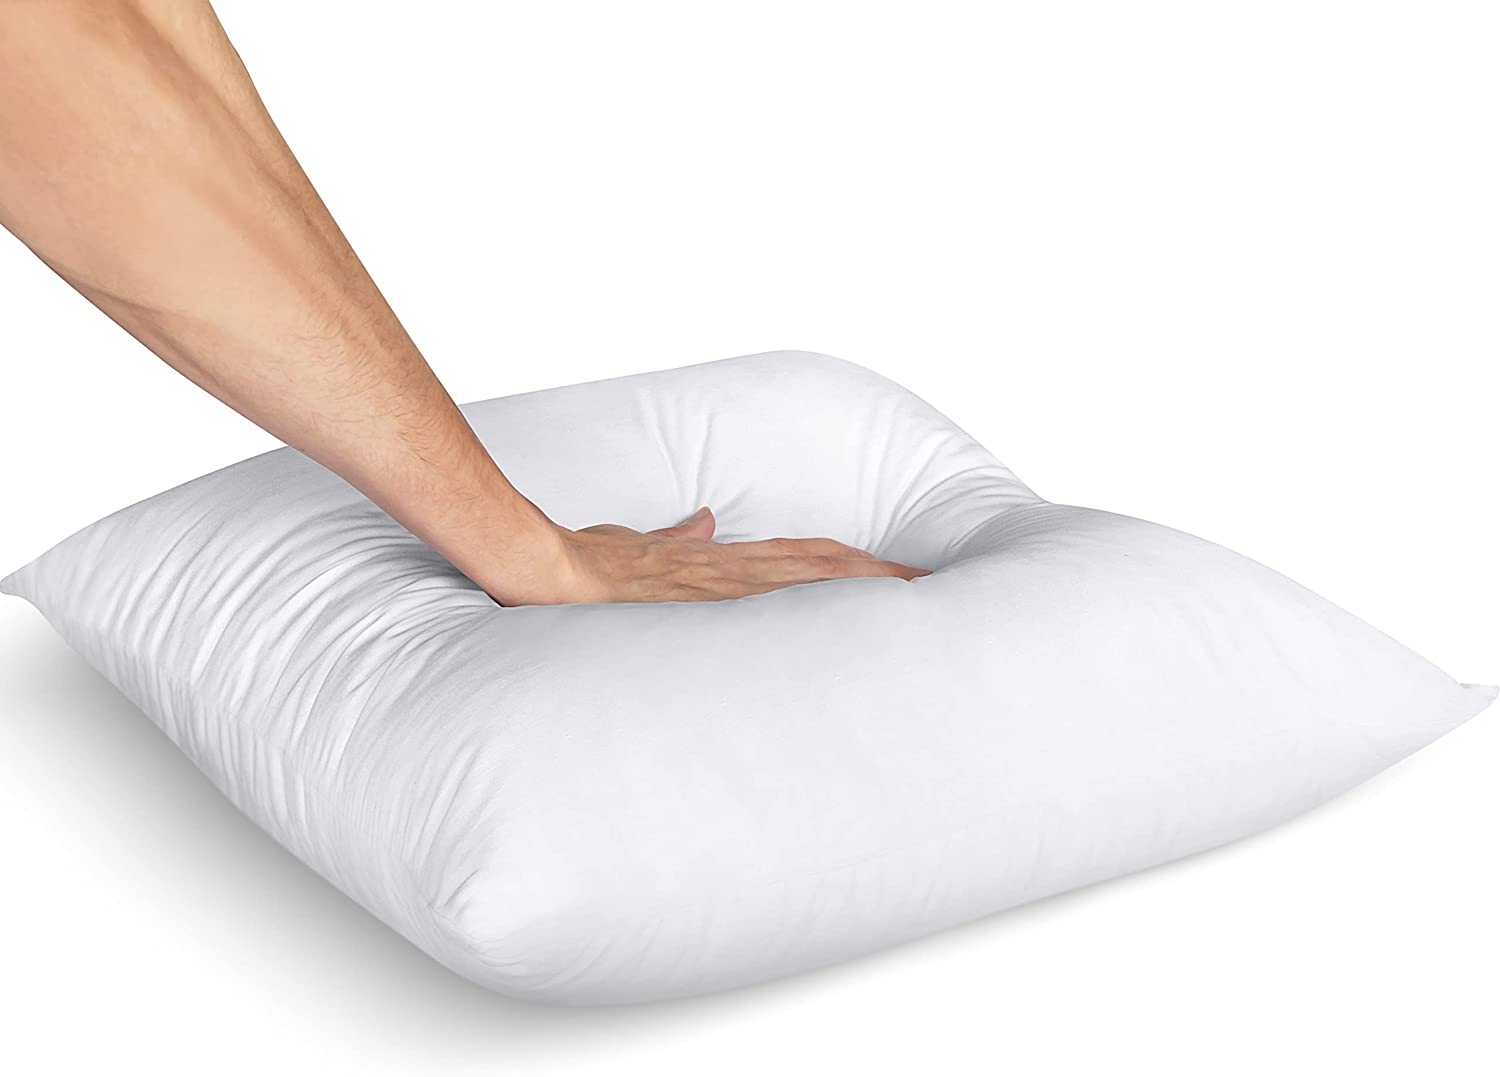 Throw Pillows Insert By Utopia bedding – Utopia Deals